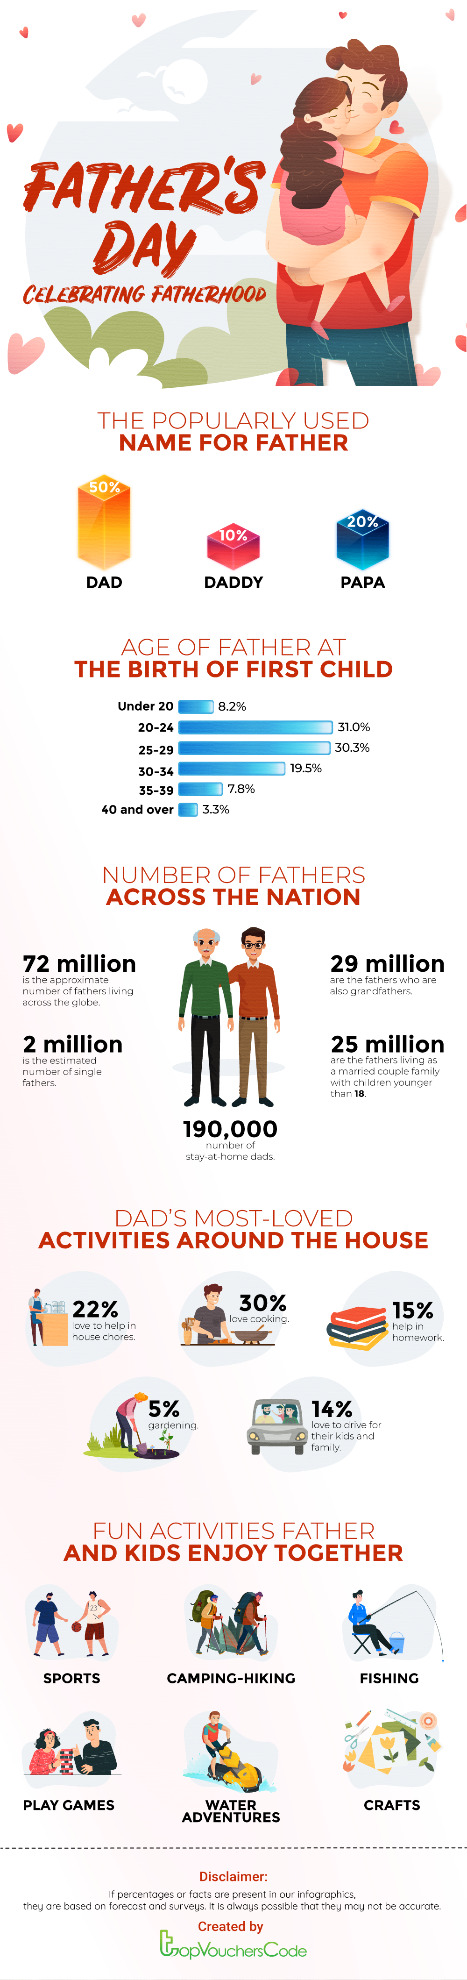 Father's Day - Celebrating Fatherhood